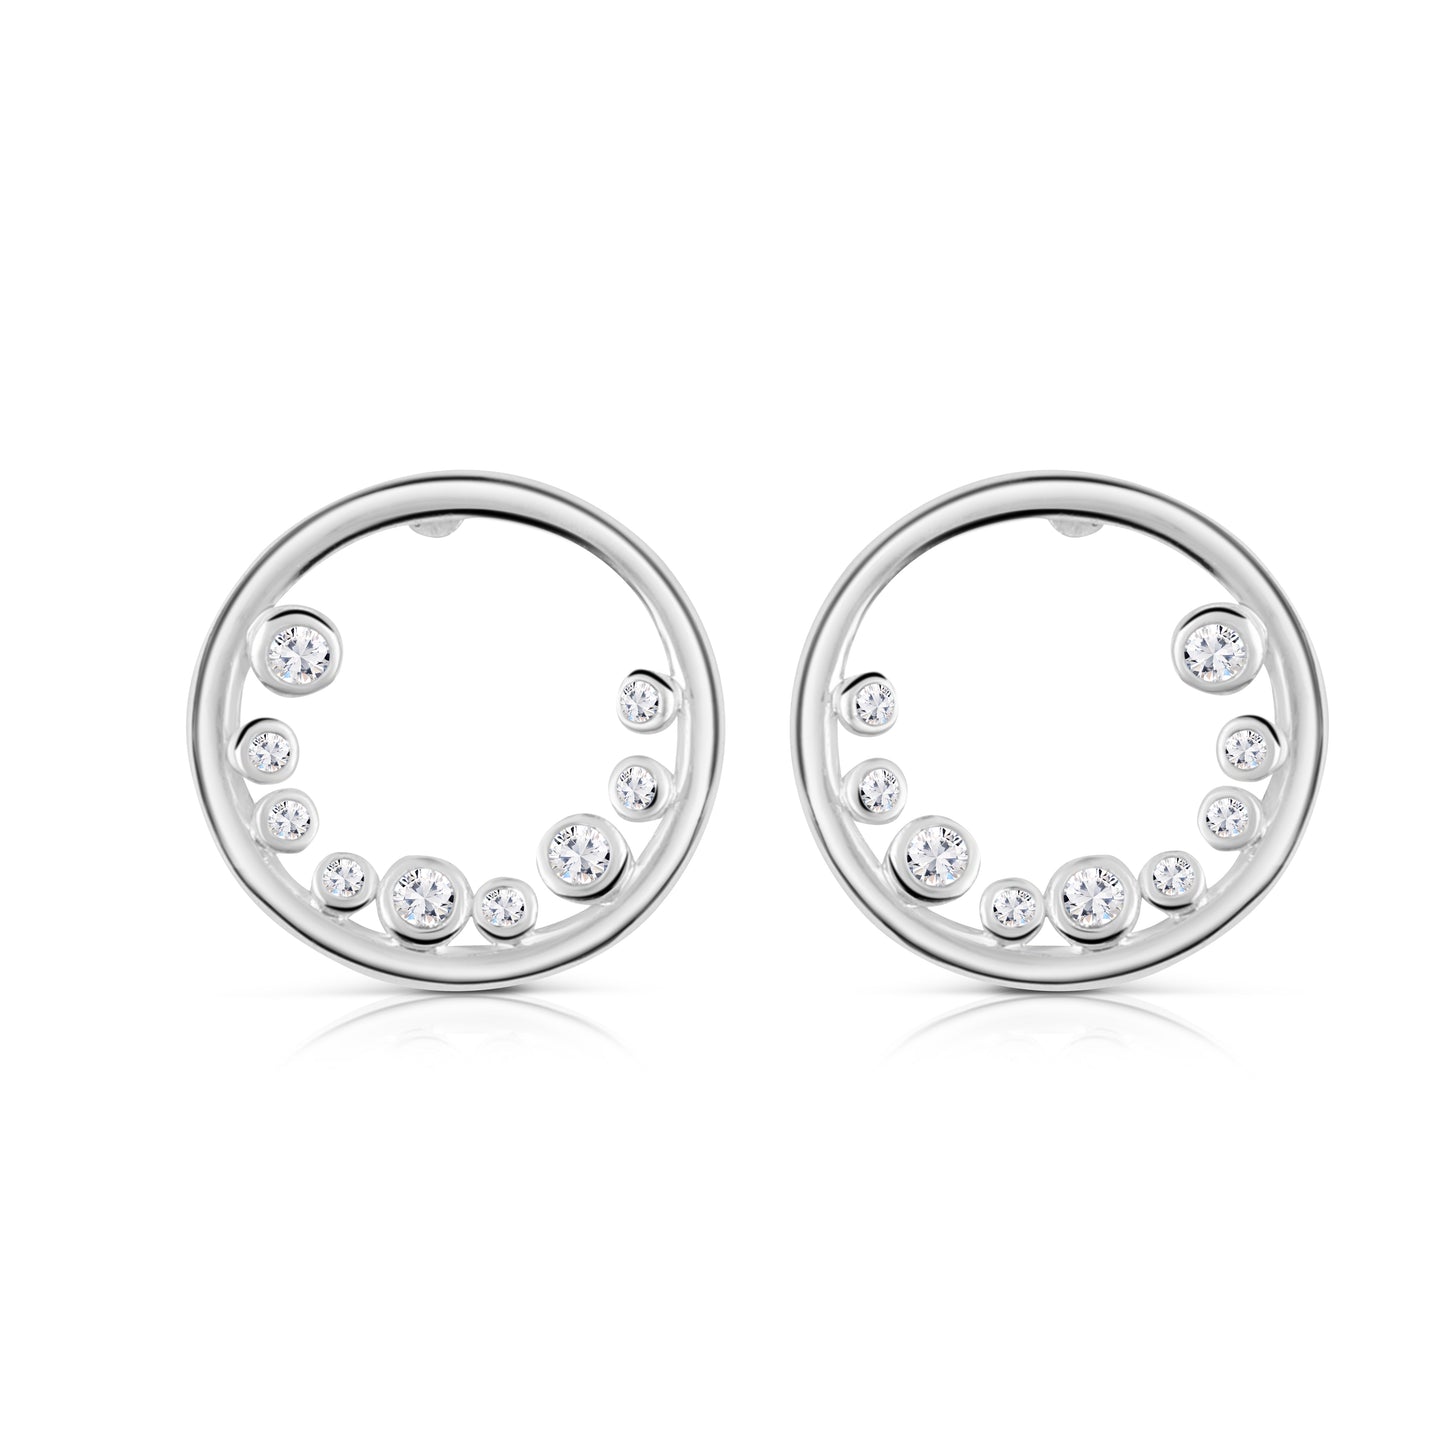 Newbridge Silverware Petite Circular Earrings with Clear Stones